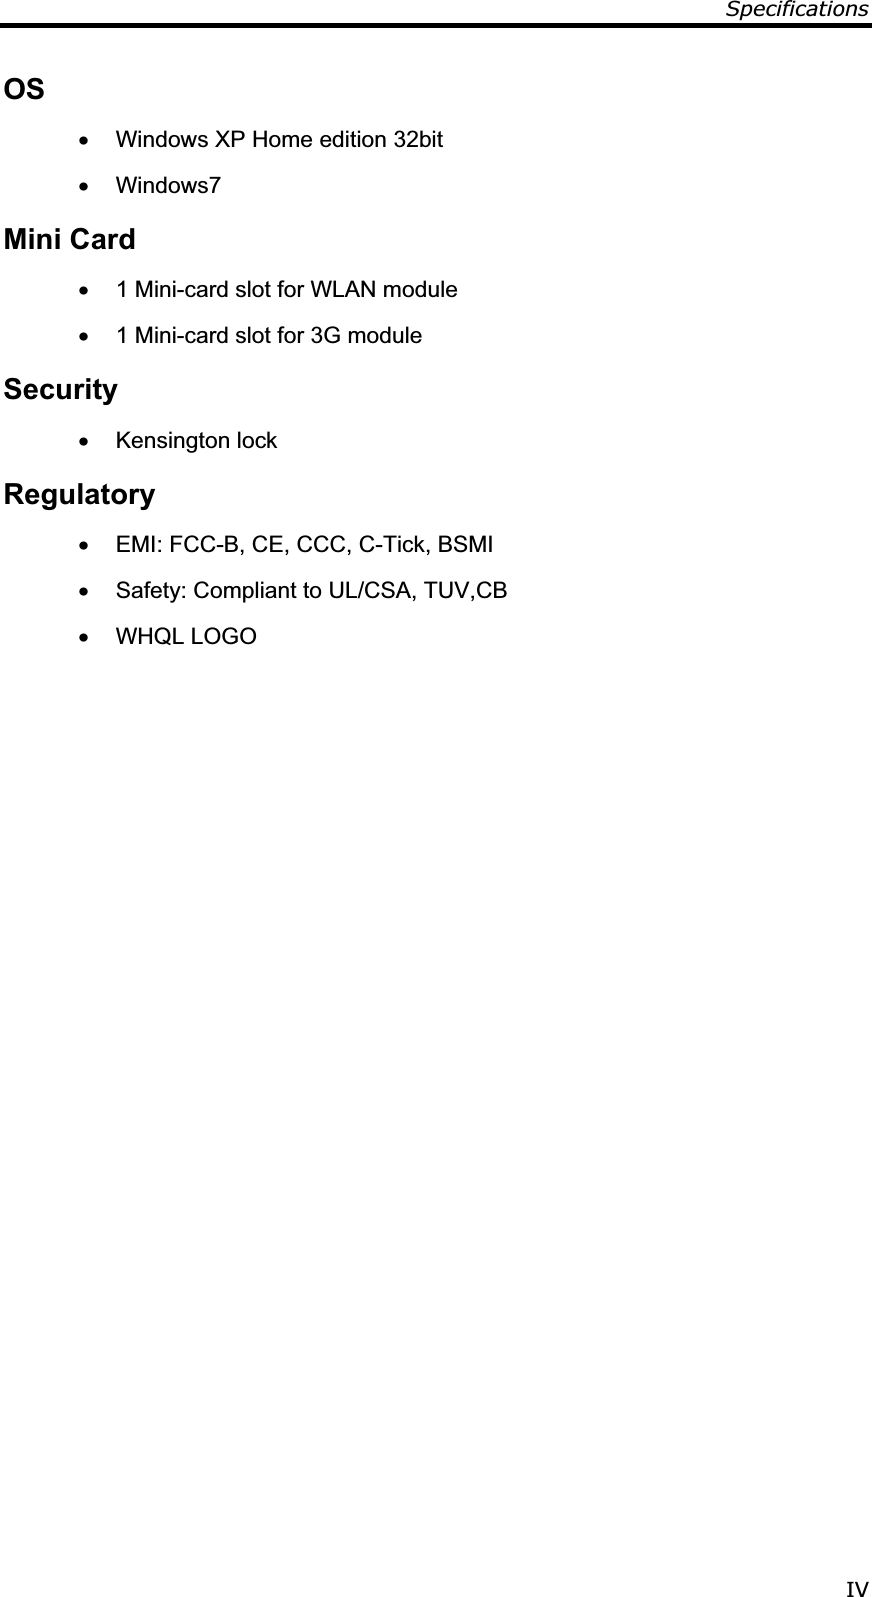 Specifications IVOSx  Windows XP Home edition 32bit  x Windows7 Mini Card x  1 Mini-card slot for WLAN module x  1 Mini-card slot for 3G module Securityx Kensington lock Regulatory x  EMI: FCC-B, CE, CCC, C-Tick, BSMI x  Safety: Compliant to UL/CSA, TUV,CB x WHQL LOGO                   